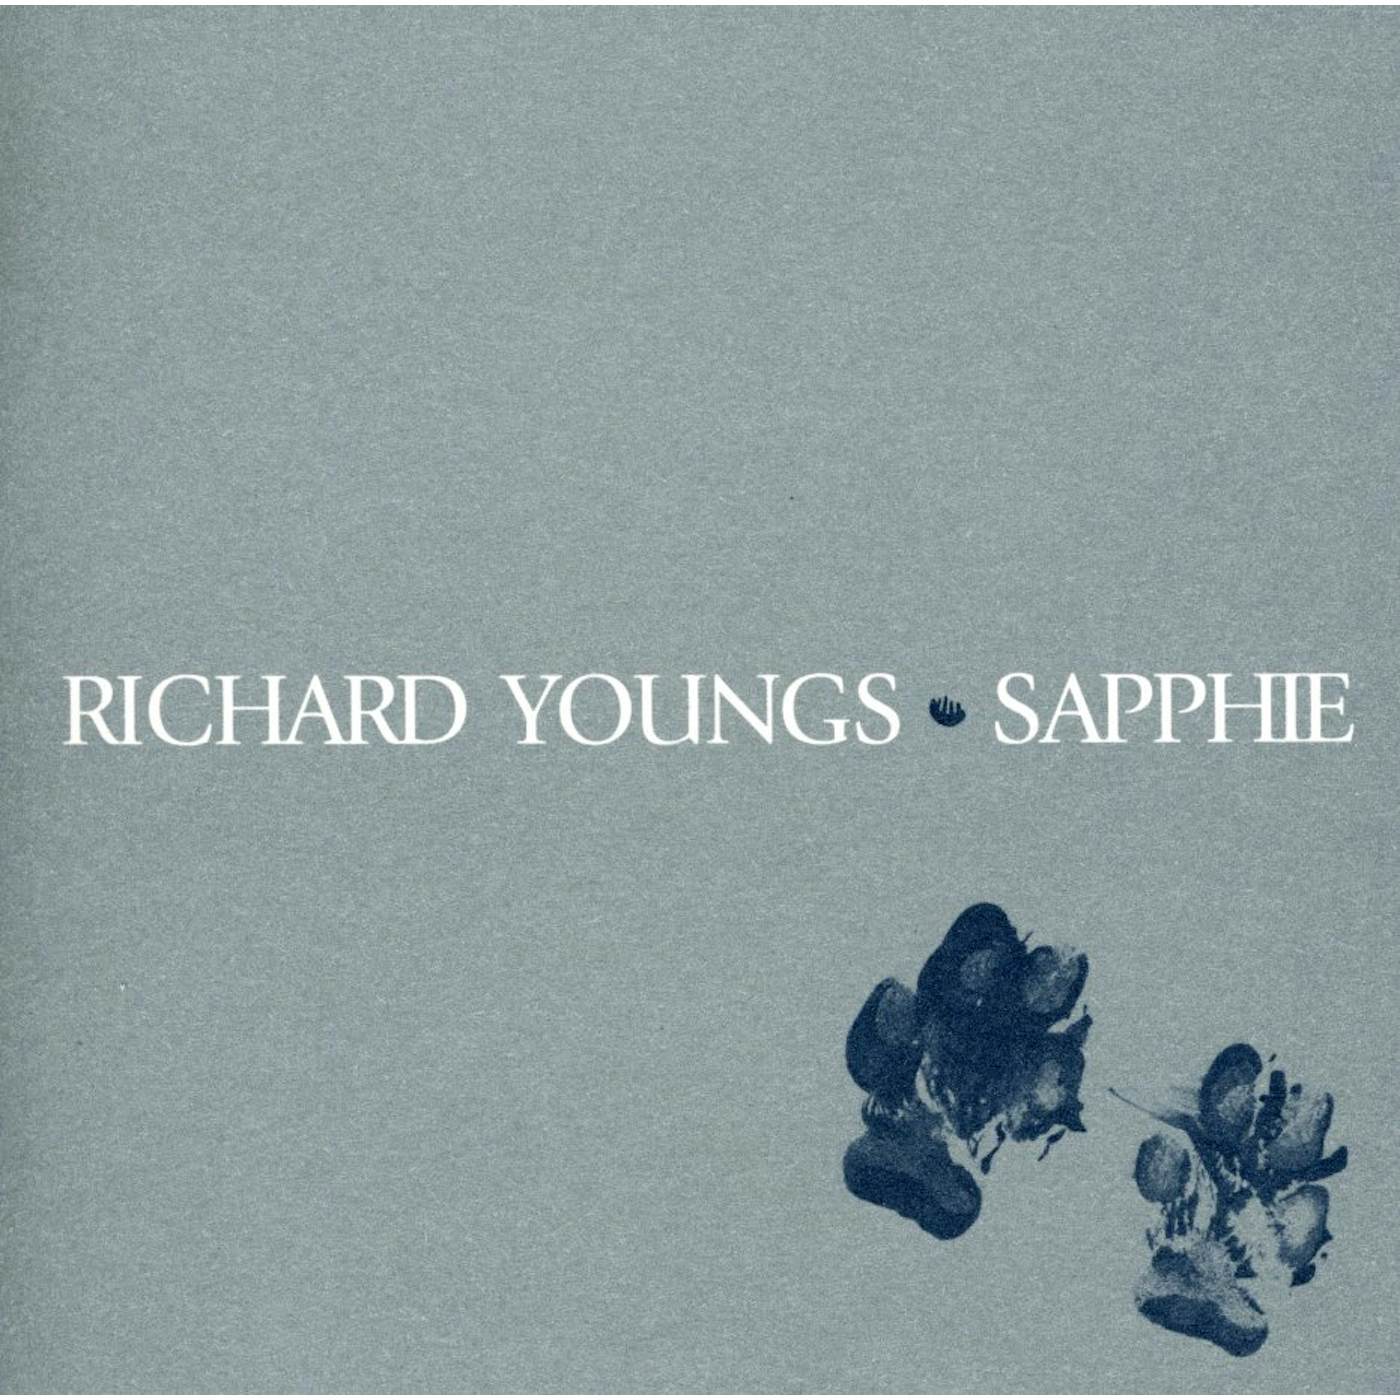 Richard Youngs SAPPHIE CD